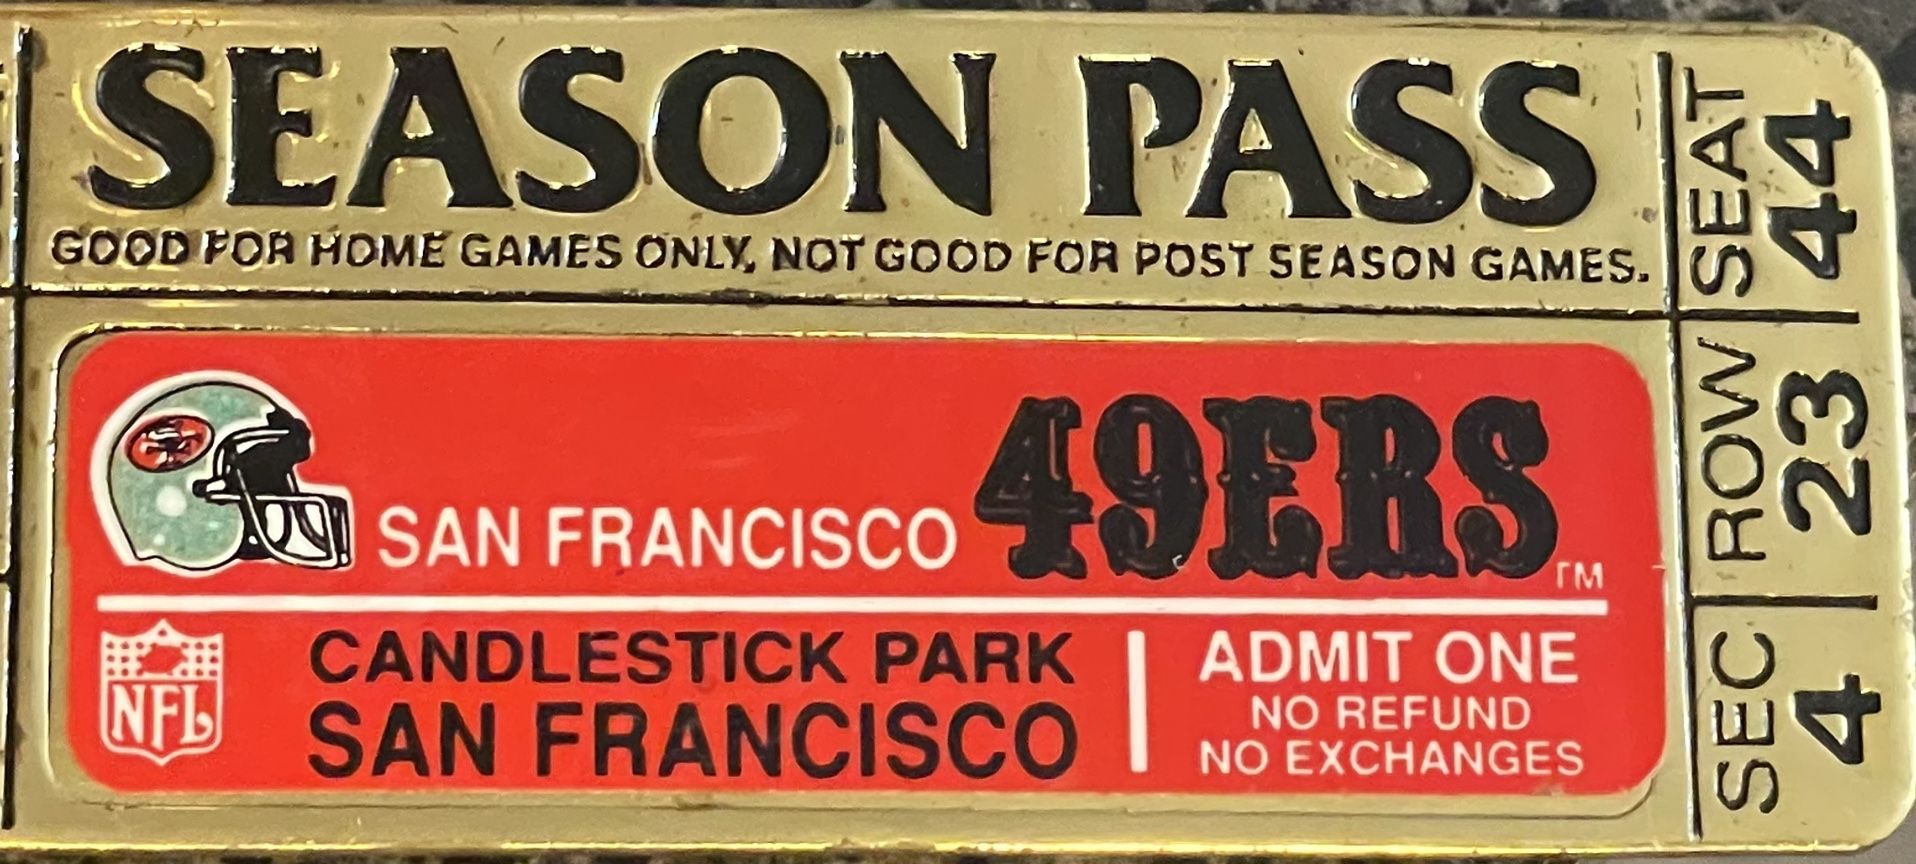 Vintage San Francisco 49ers Collectible Plastic Travel Mug (Cracked)